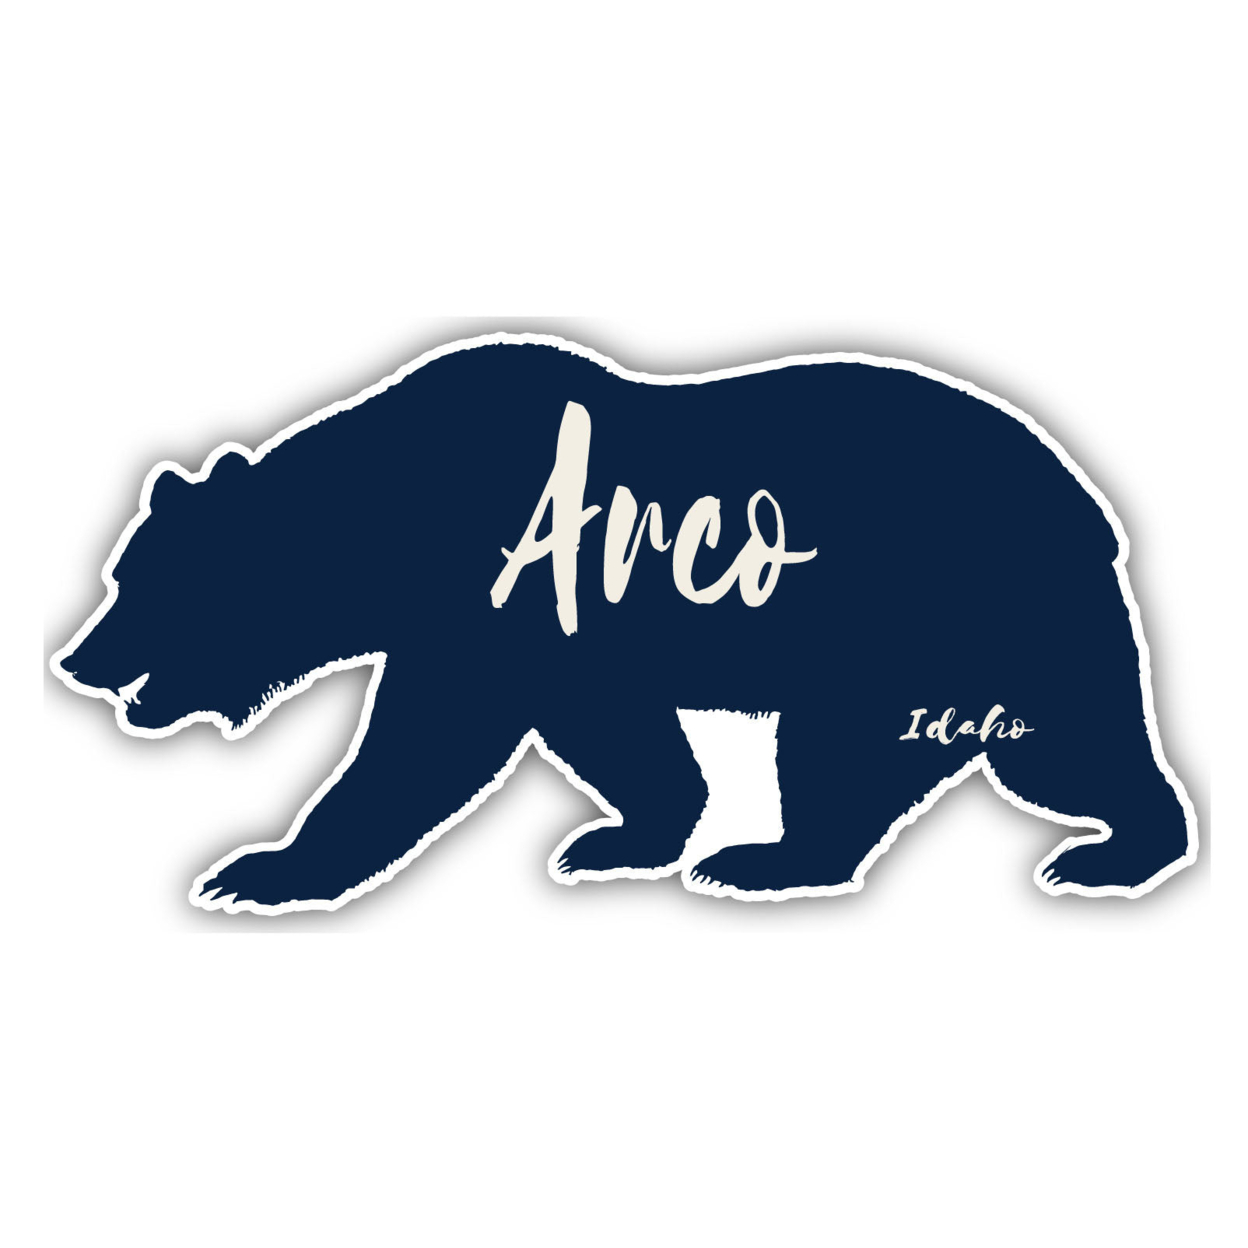 Arco Idaho Souvenir Decorative Stickers (Choose Theme And Size) - Single Unit, 12-Inch, Bear